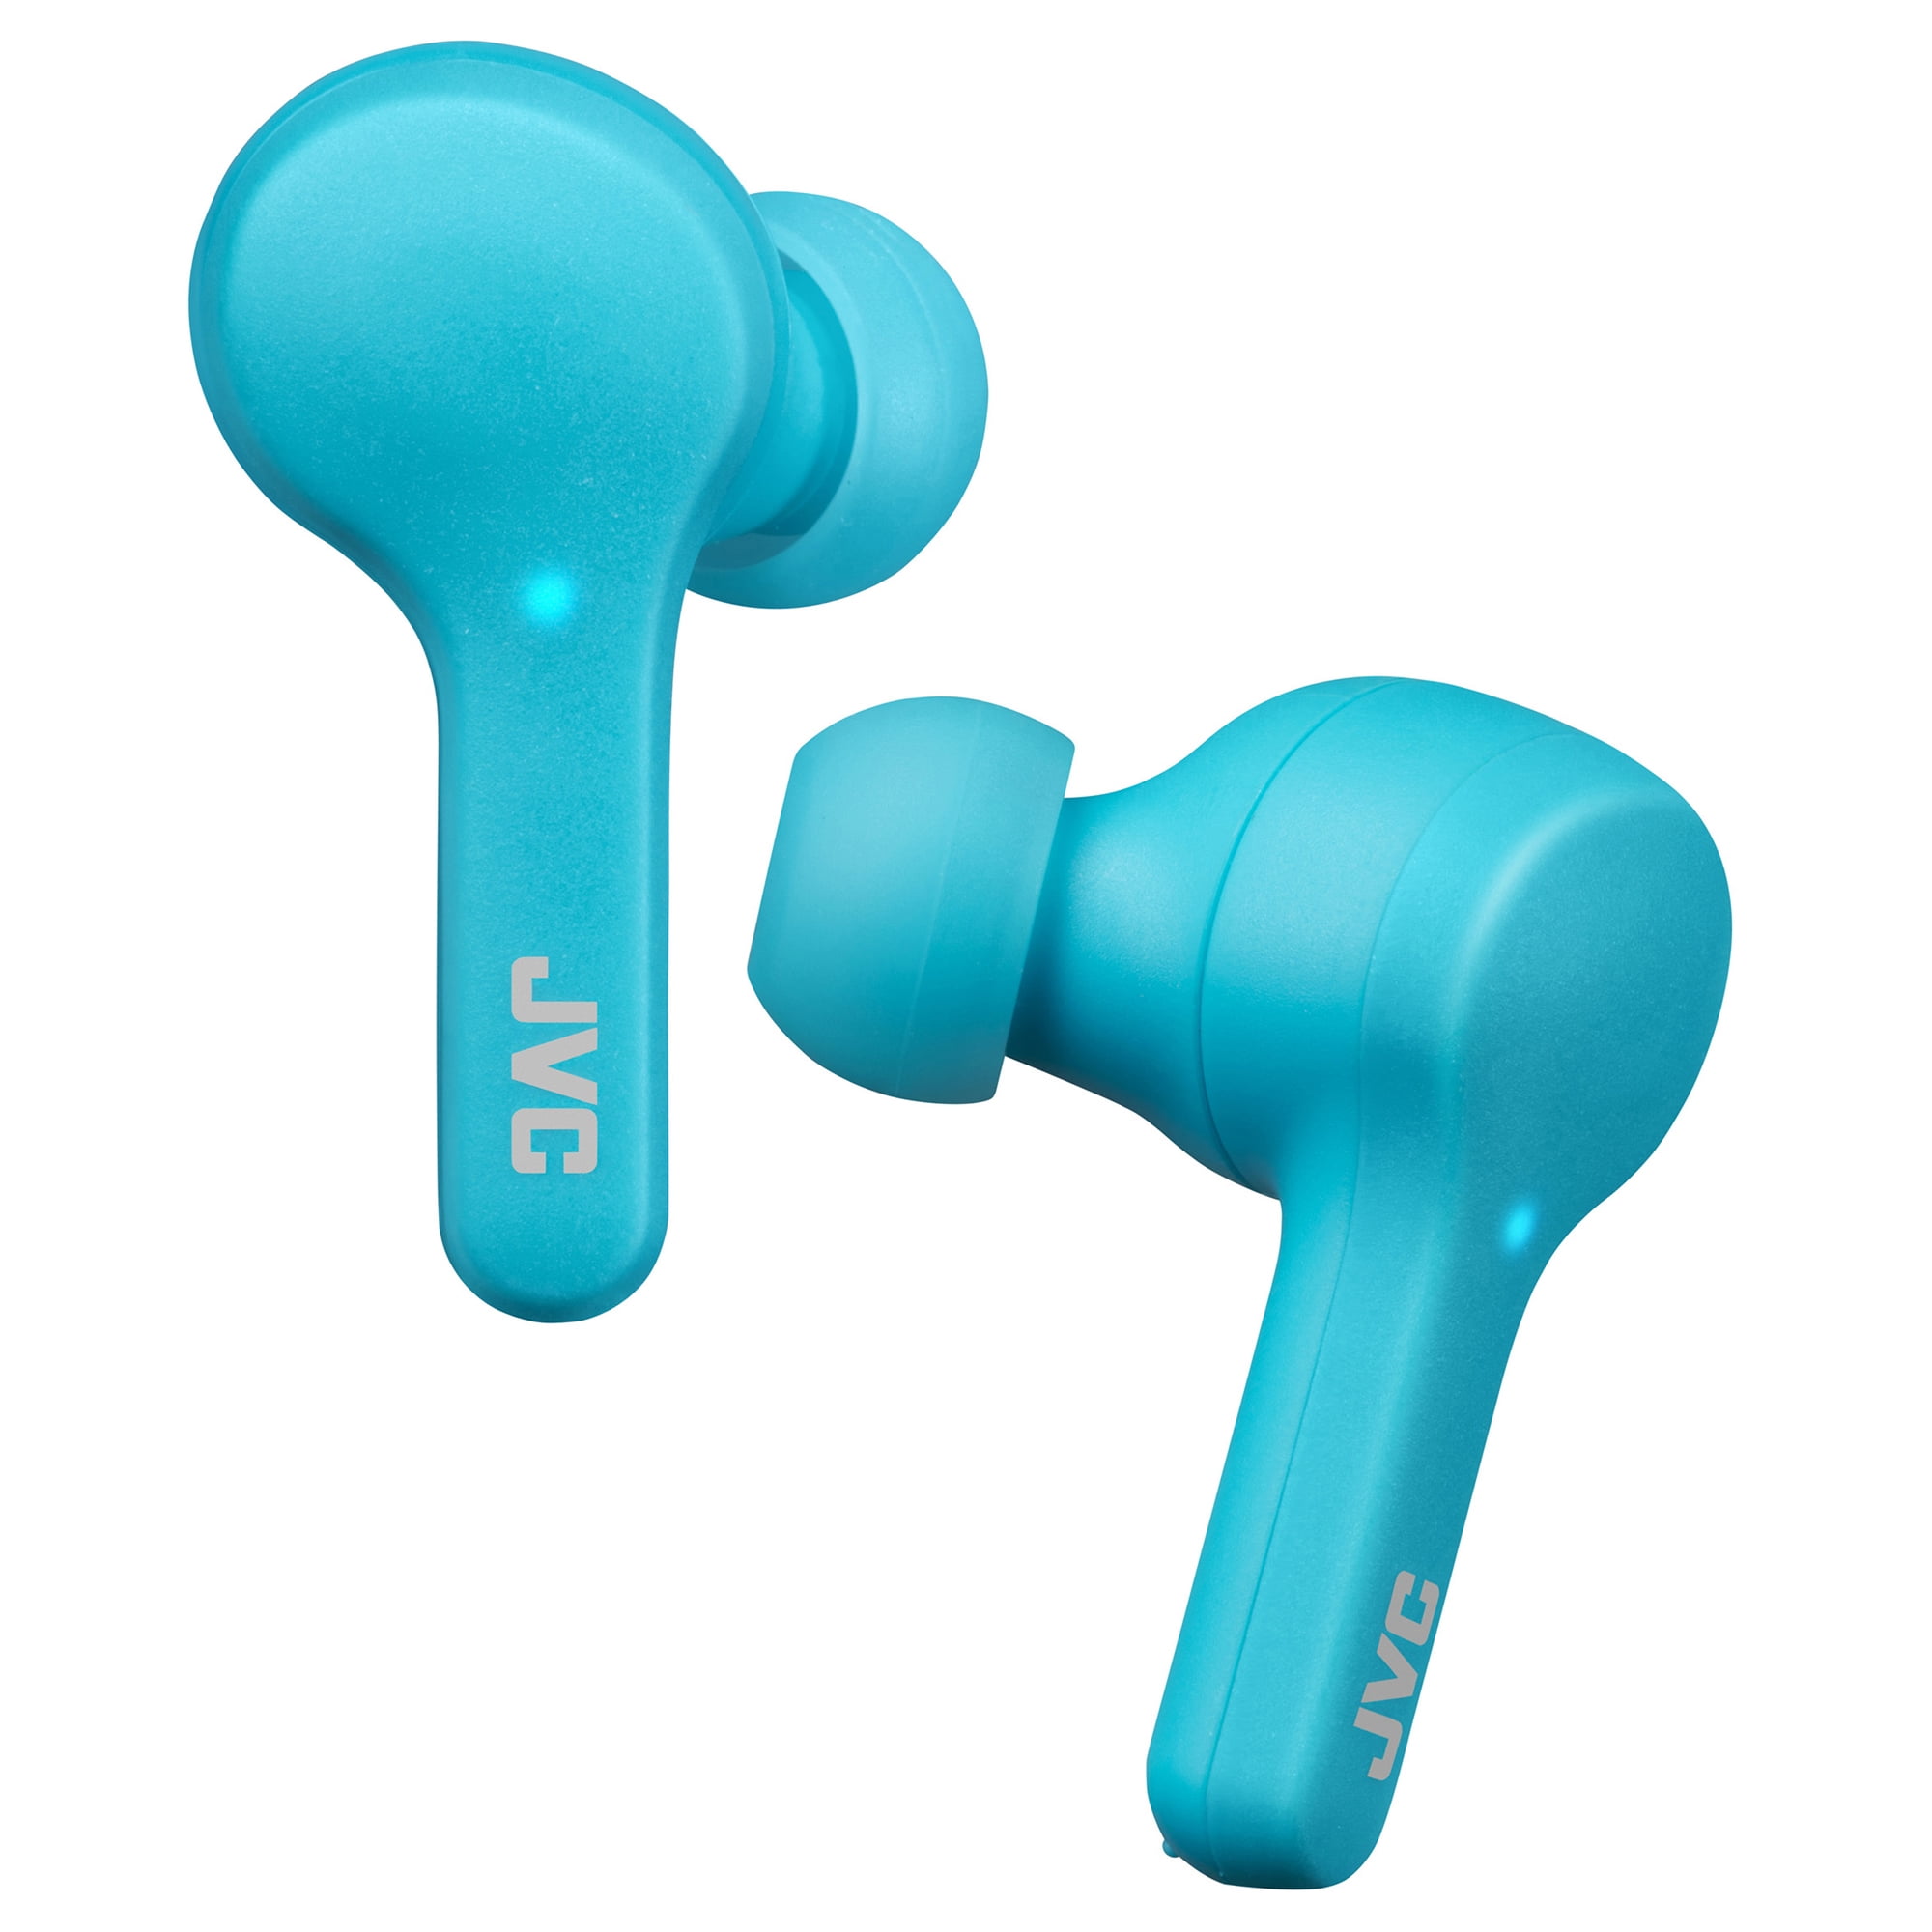 JVC Gumy Truly Wireless Earbuds Headphones, Bluetooth 5.0, Water